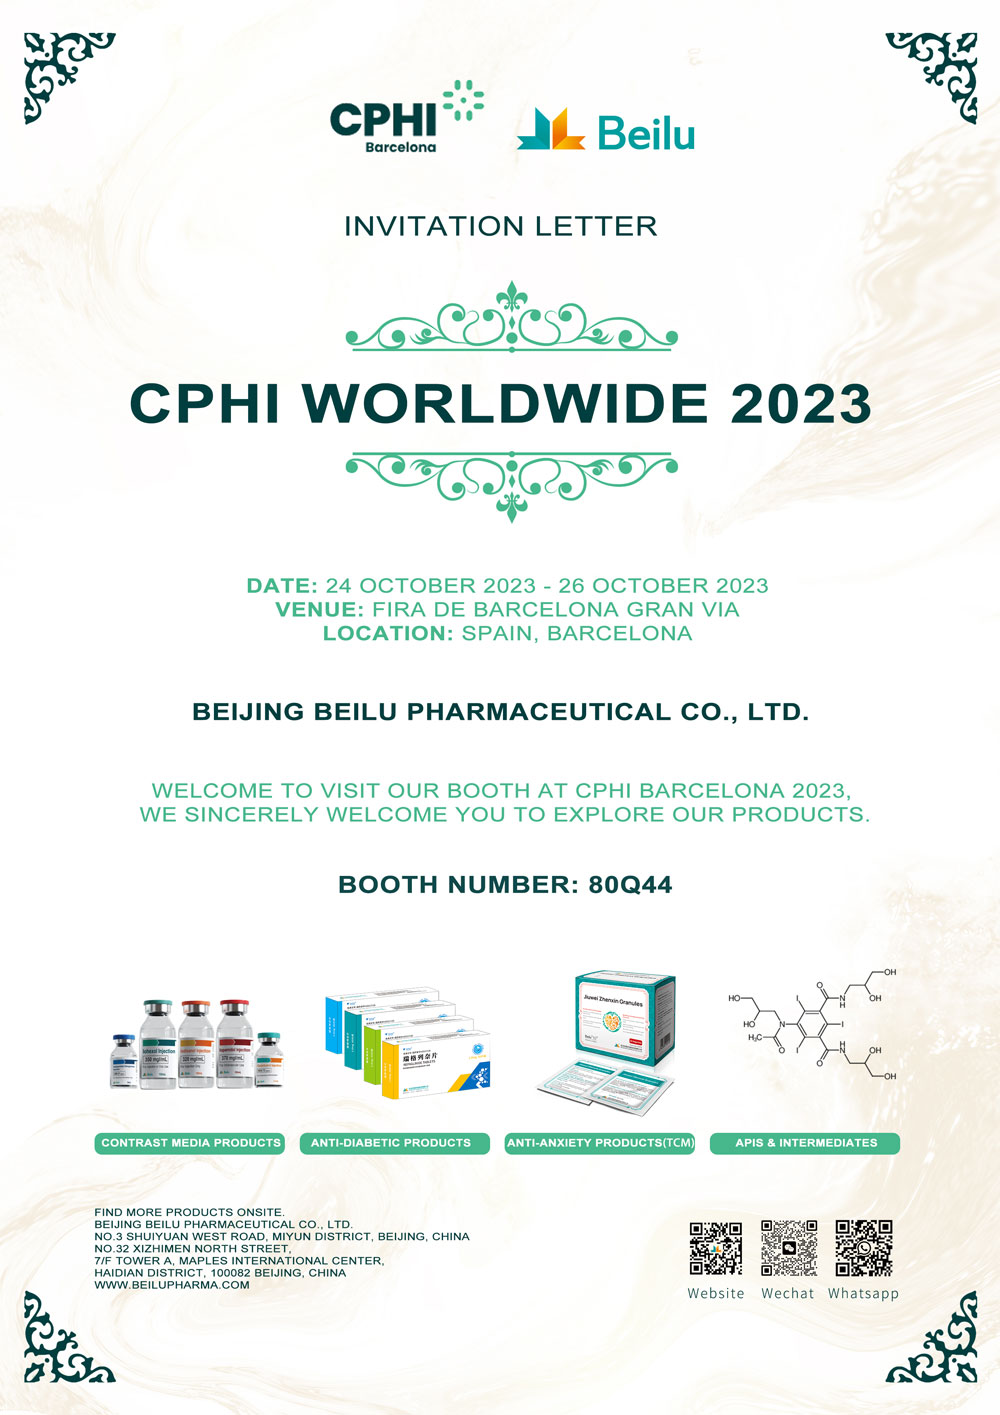 cphi-worldwide-2023-beilu.jpg